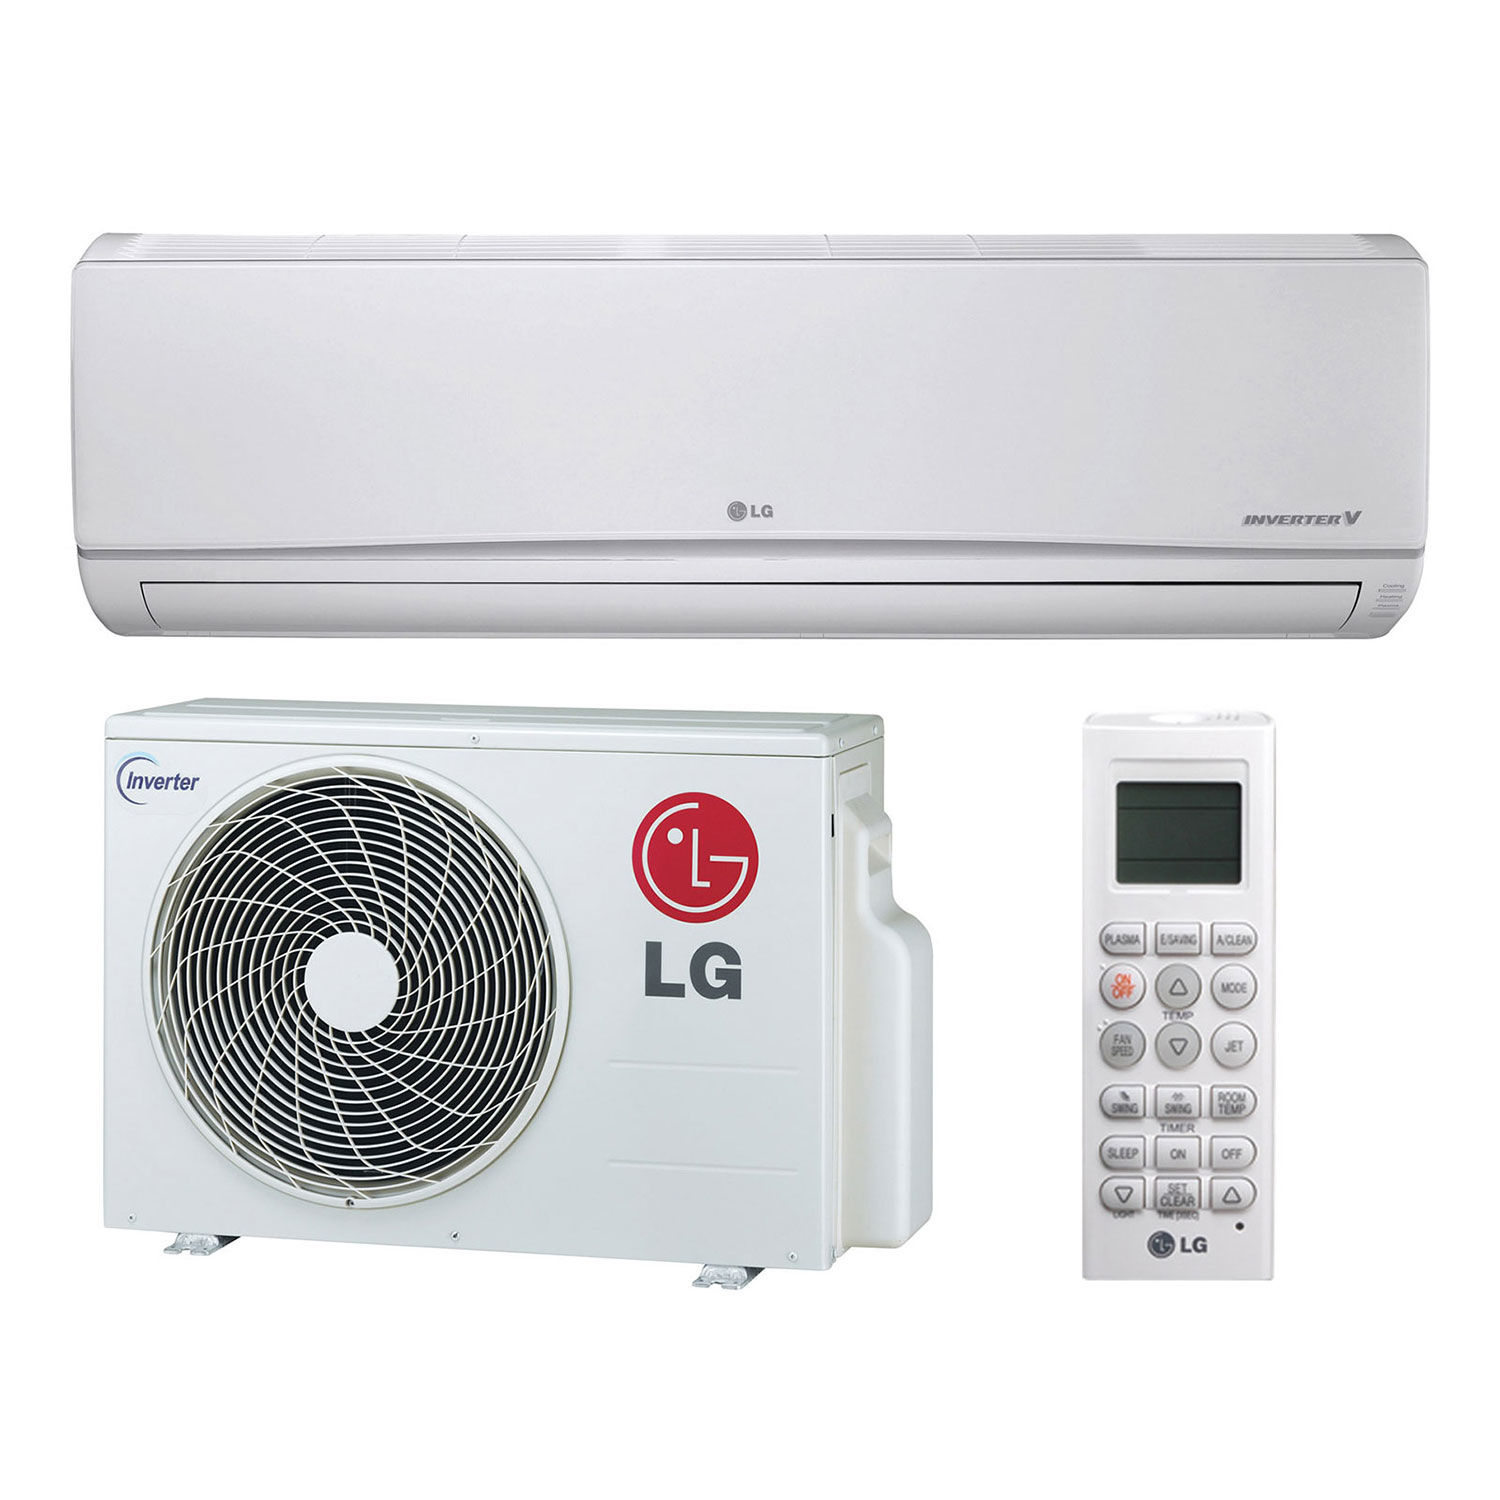 LG ac service and Repair Home Appliance near me